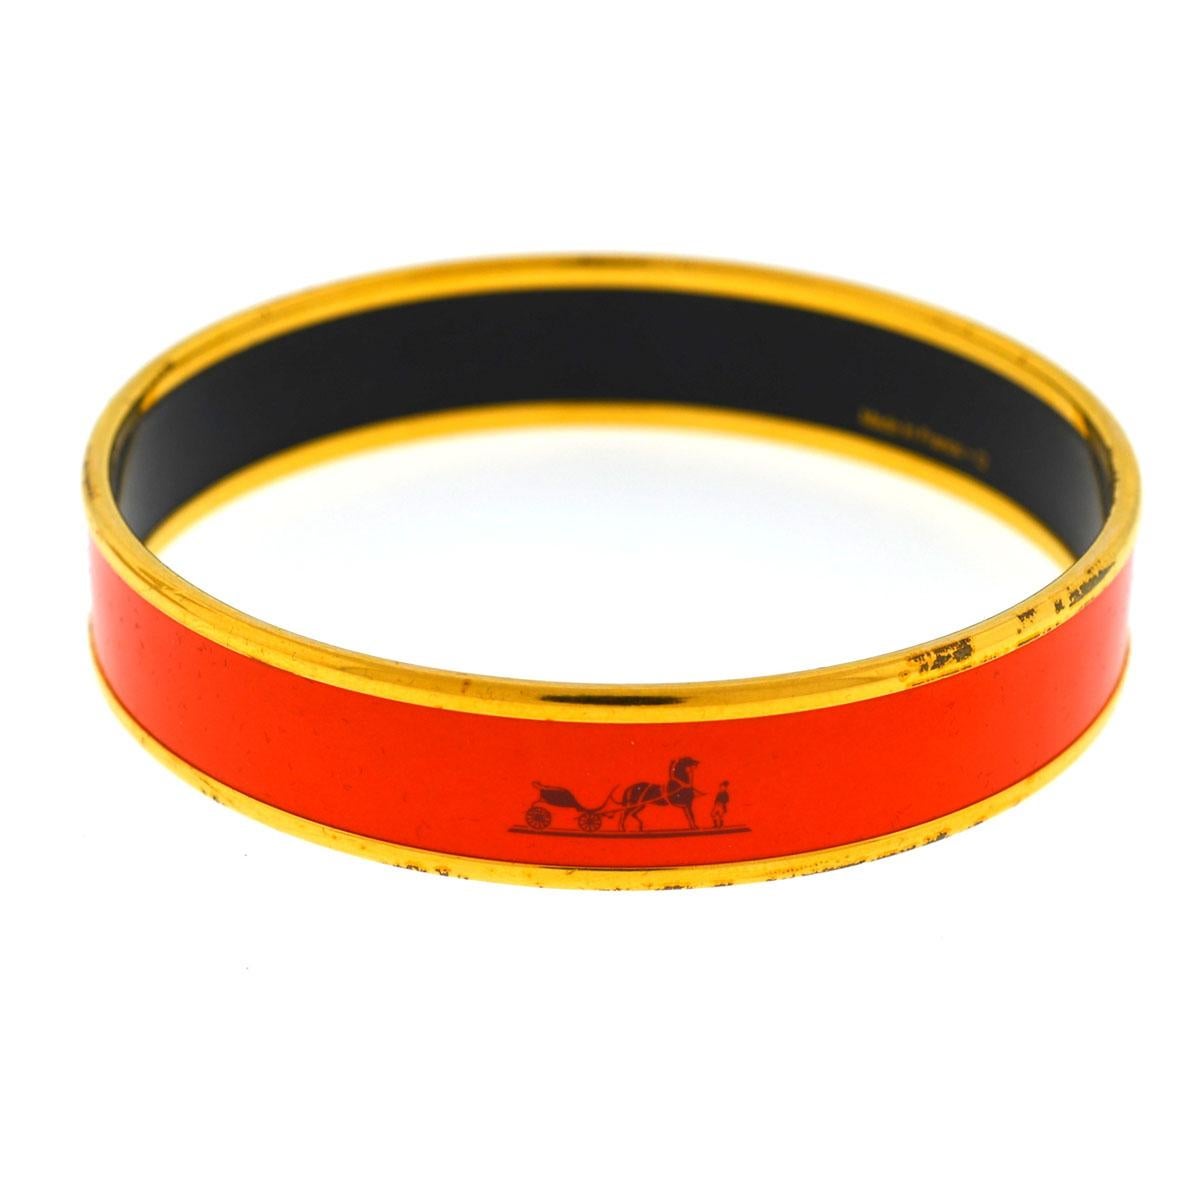 Company - HERMES
Style - Orange Gold Tone Bangle Bracelet
Metal - Mixed Metal - 0.5